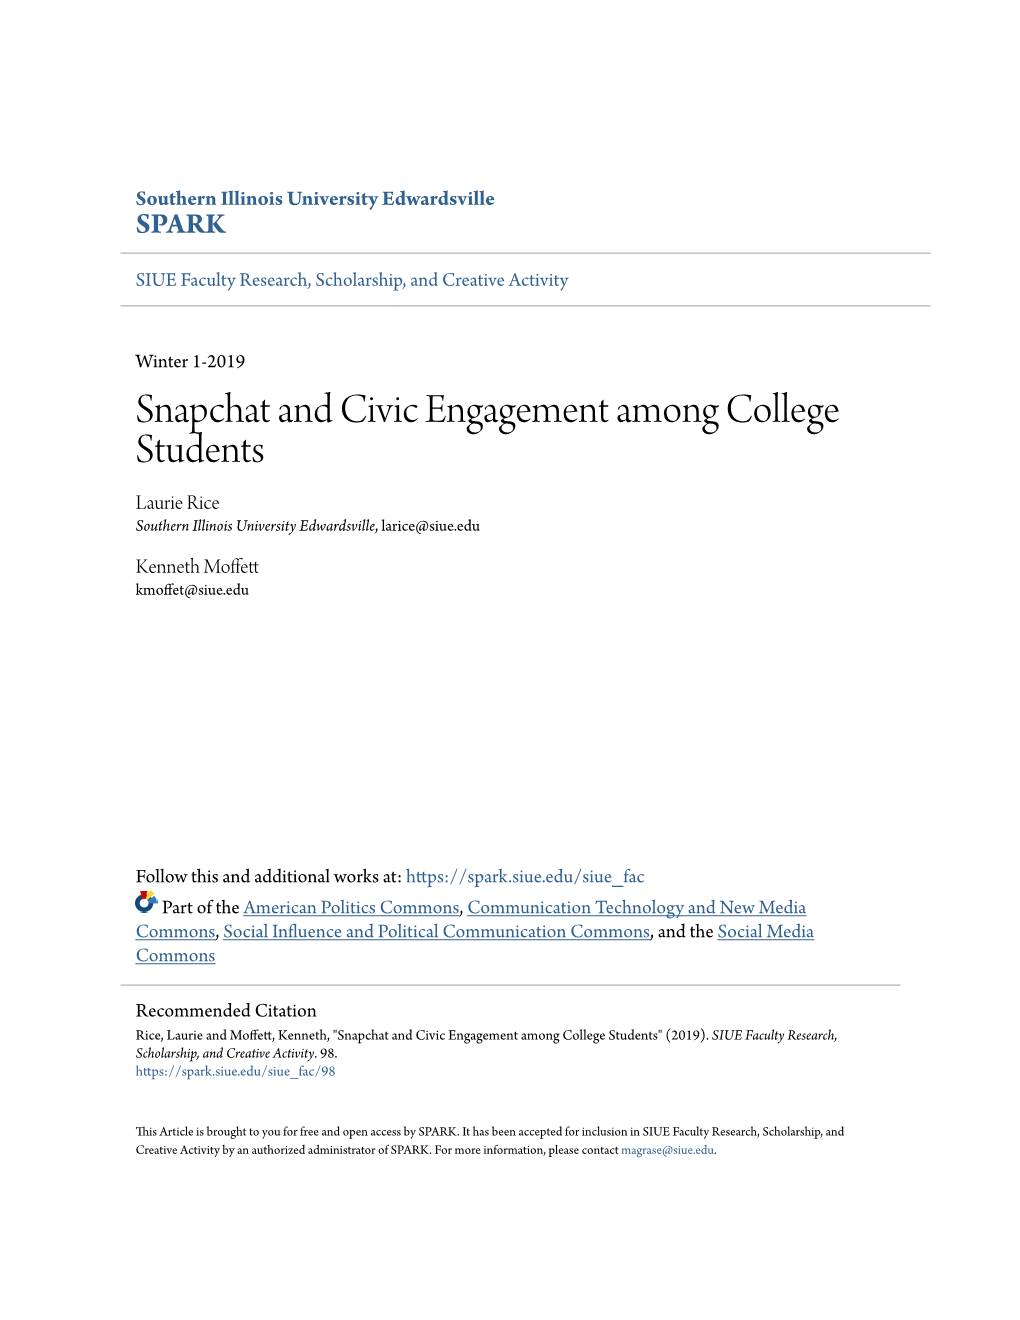 Snapchat and Civic Engagement Among College Students Laurie Rice Southern Illinois University Edwardsville, Larice@Siue.Edu